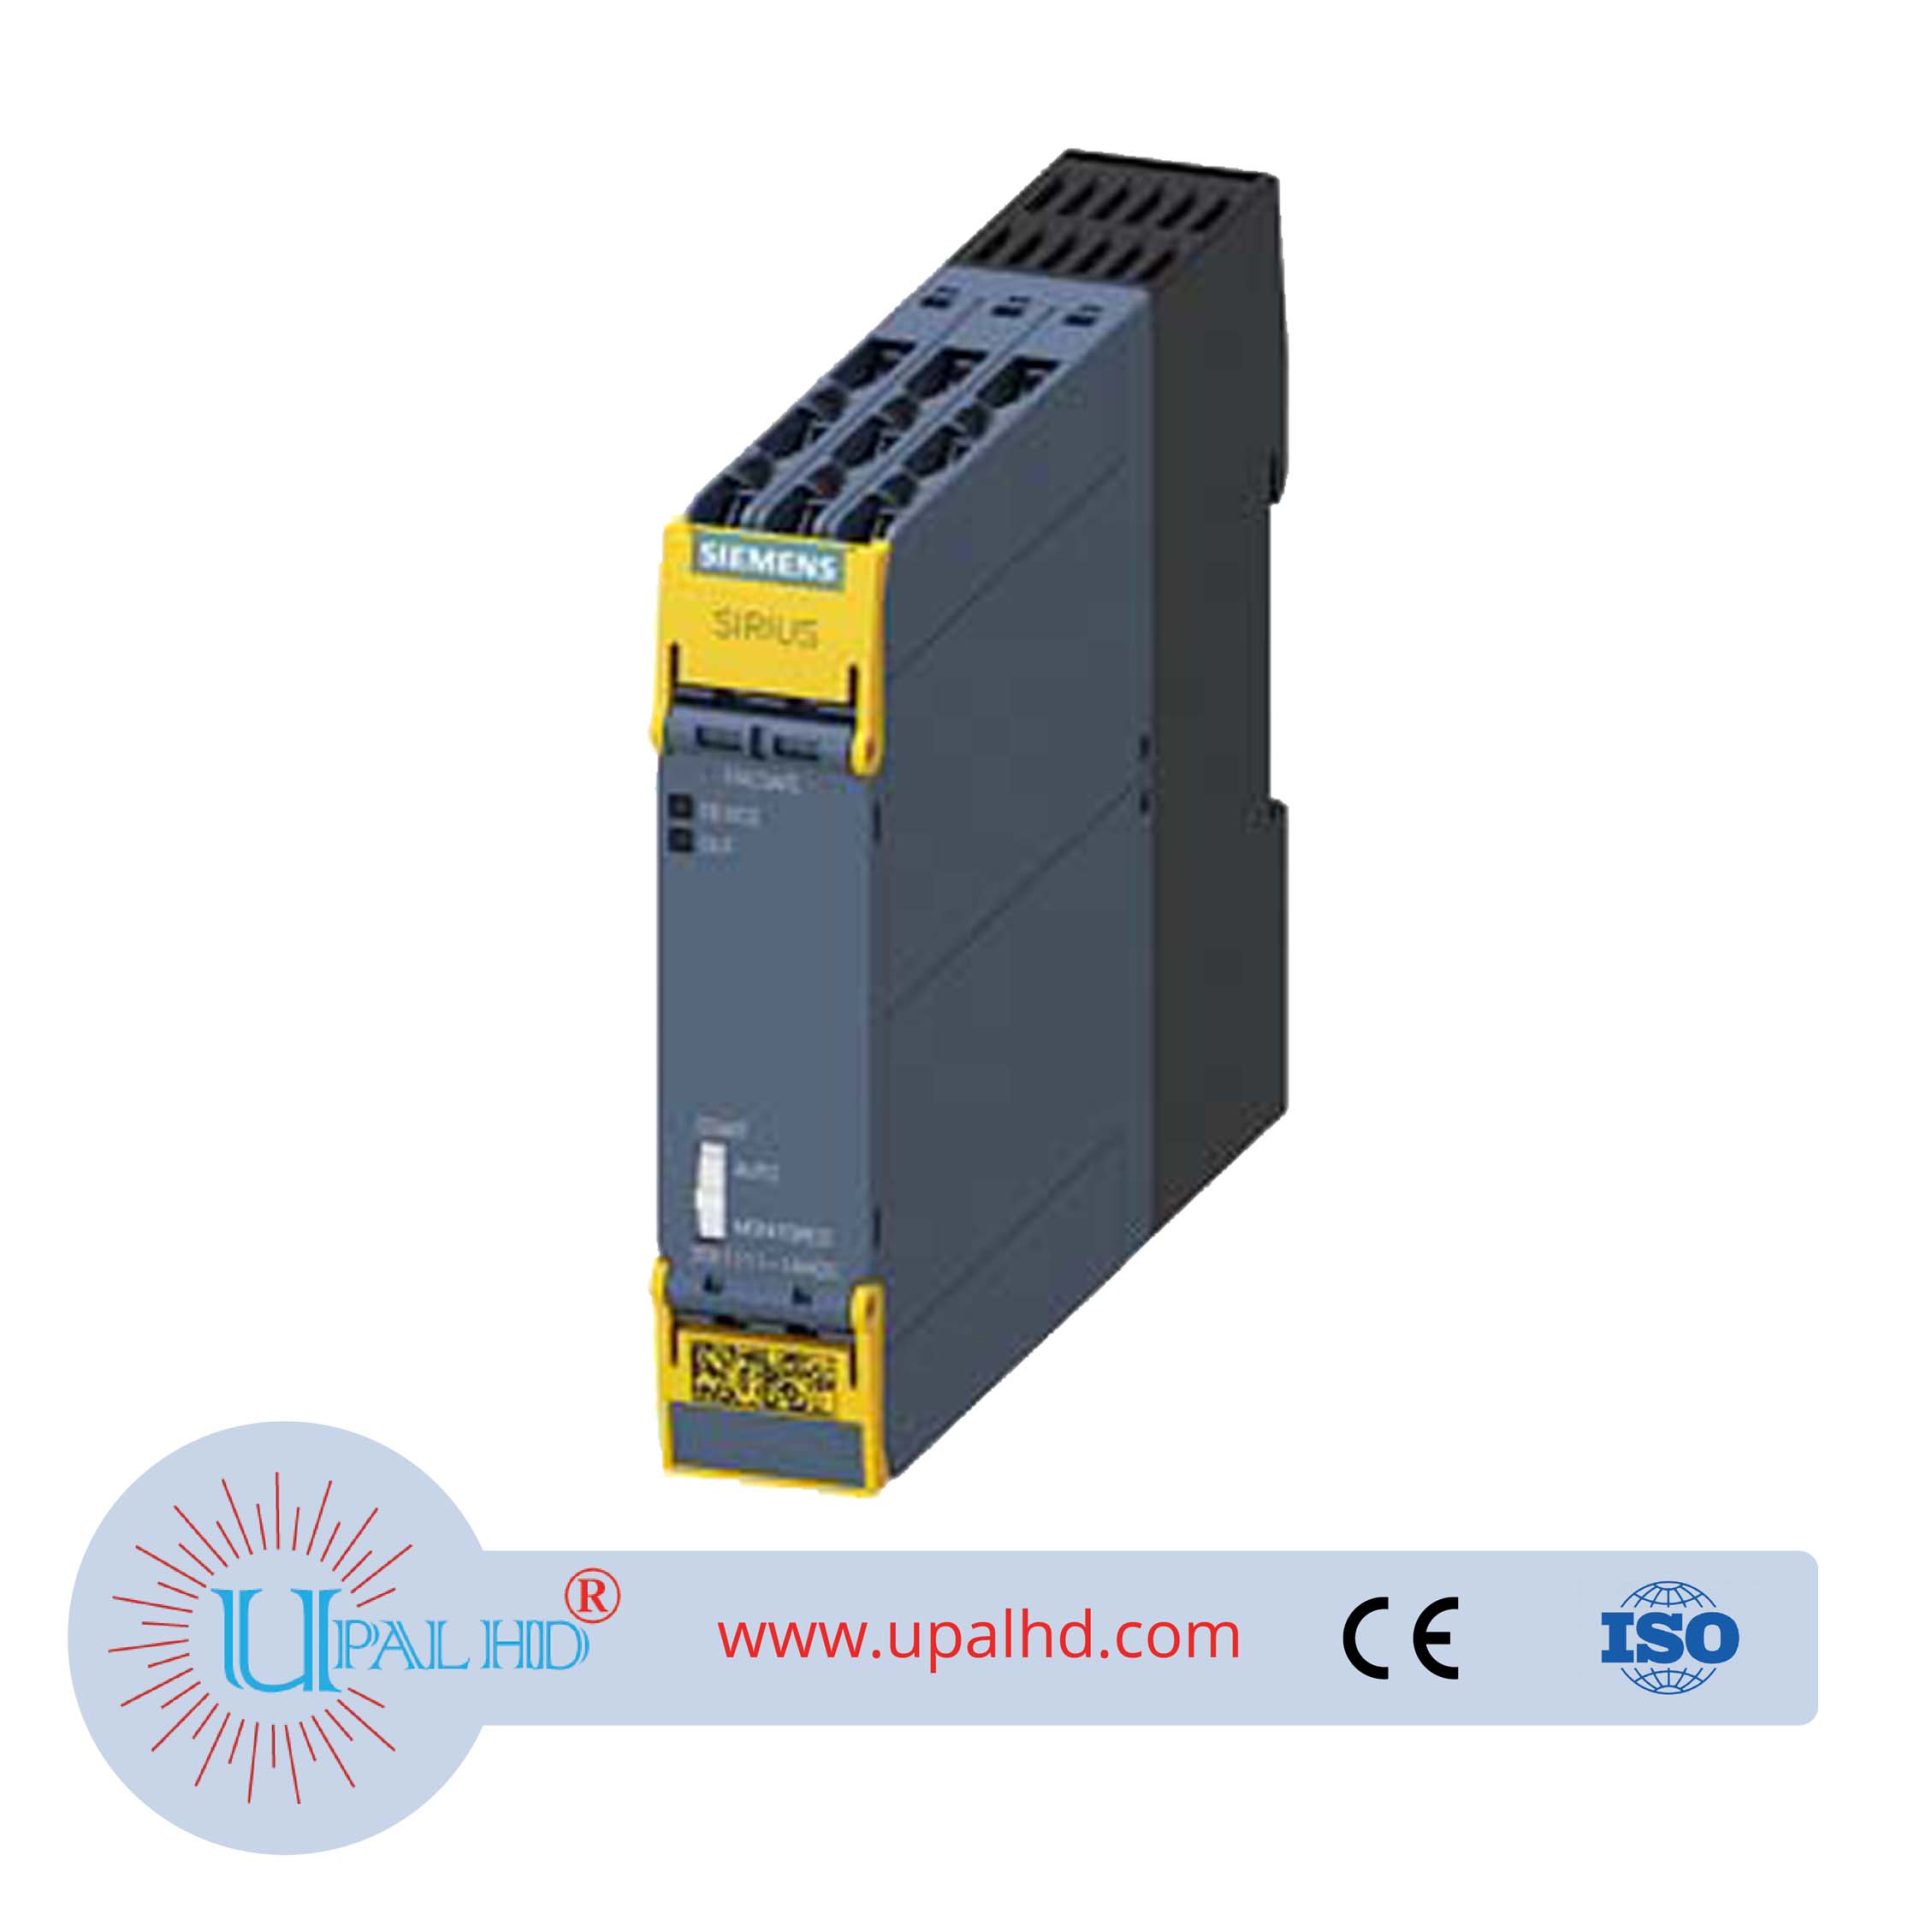 SIRIUS safety switchgear, basic device, 3SK2 series, 10 F-DI, 2 F-DQ, 1 DQ